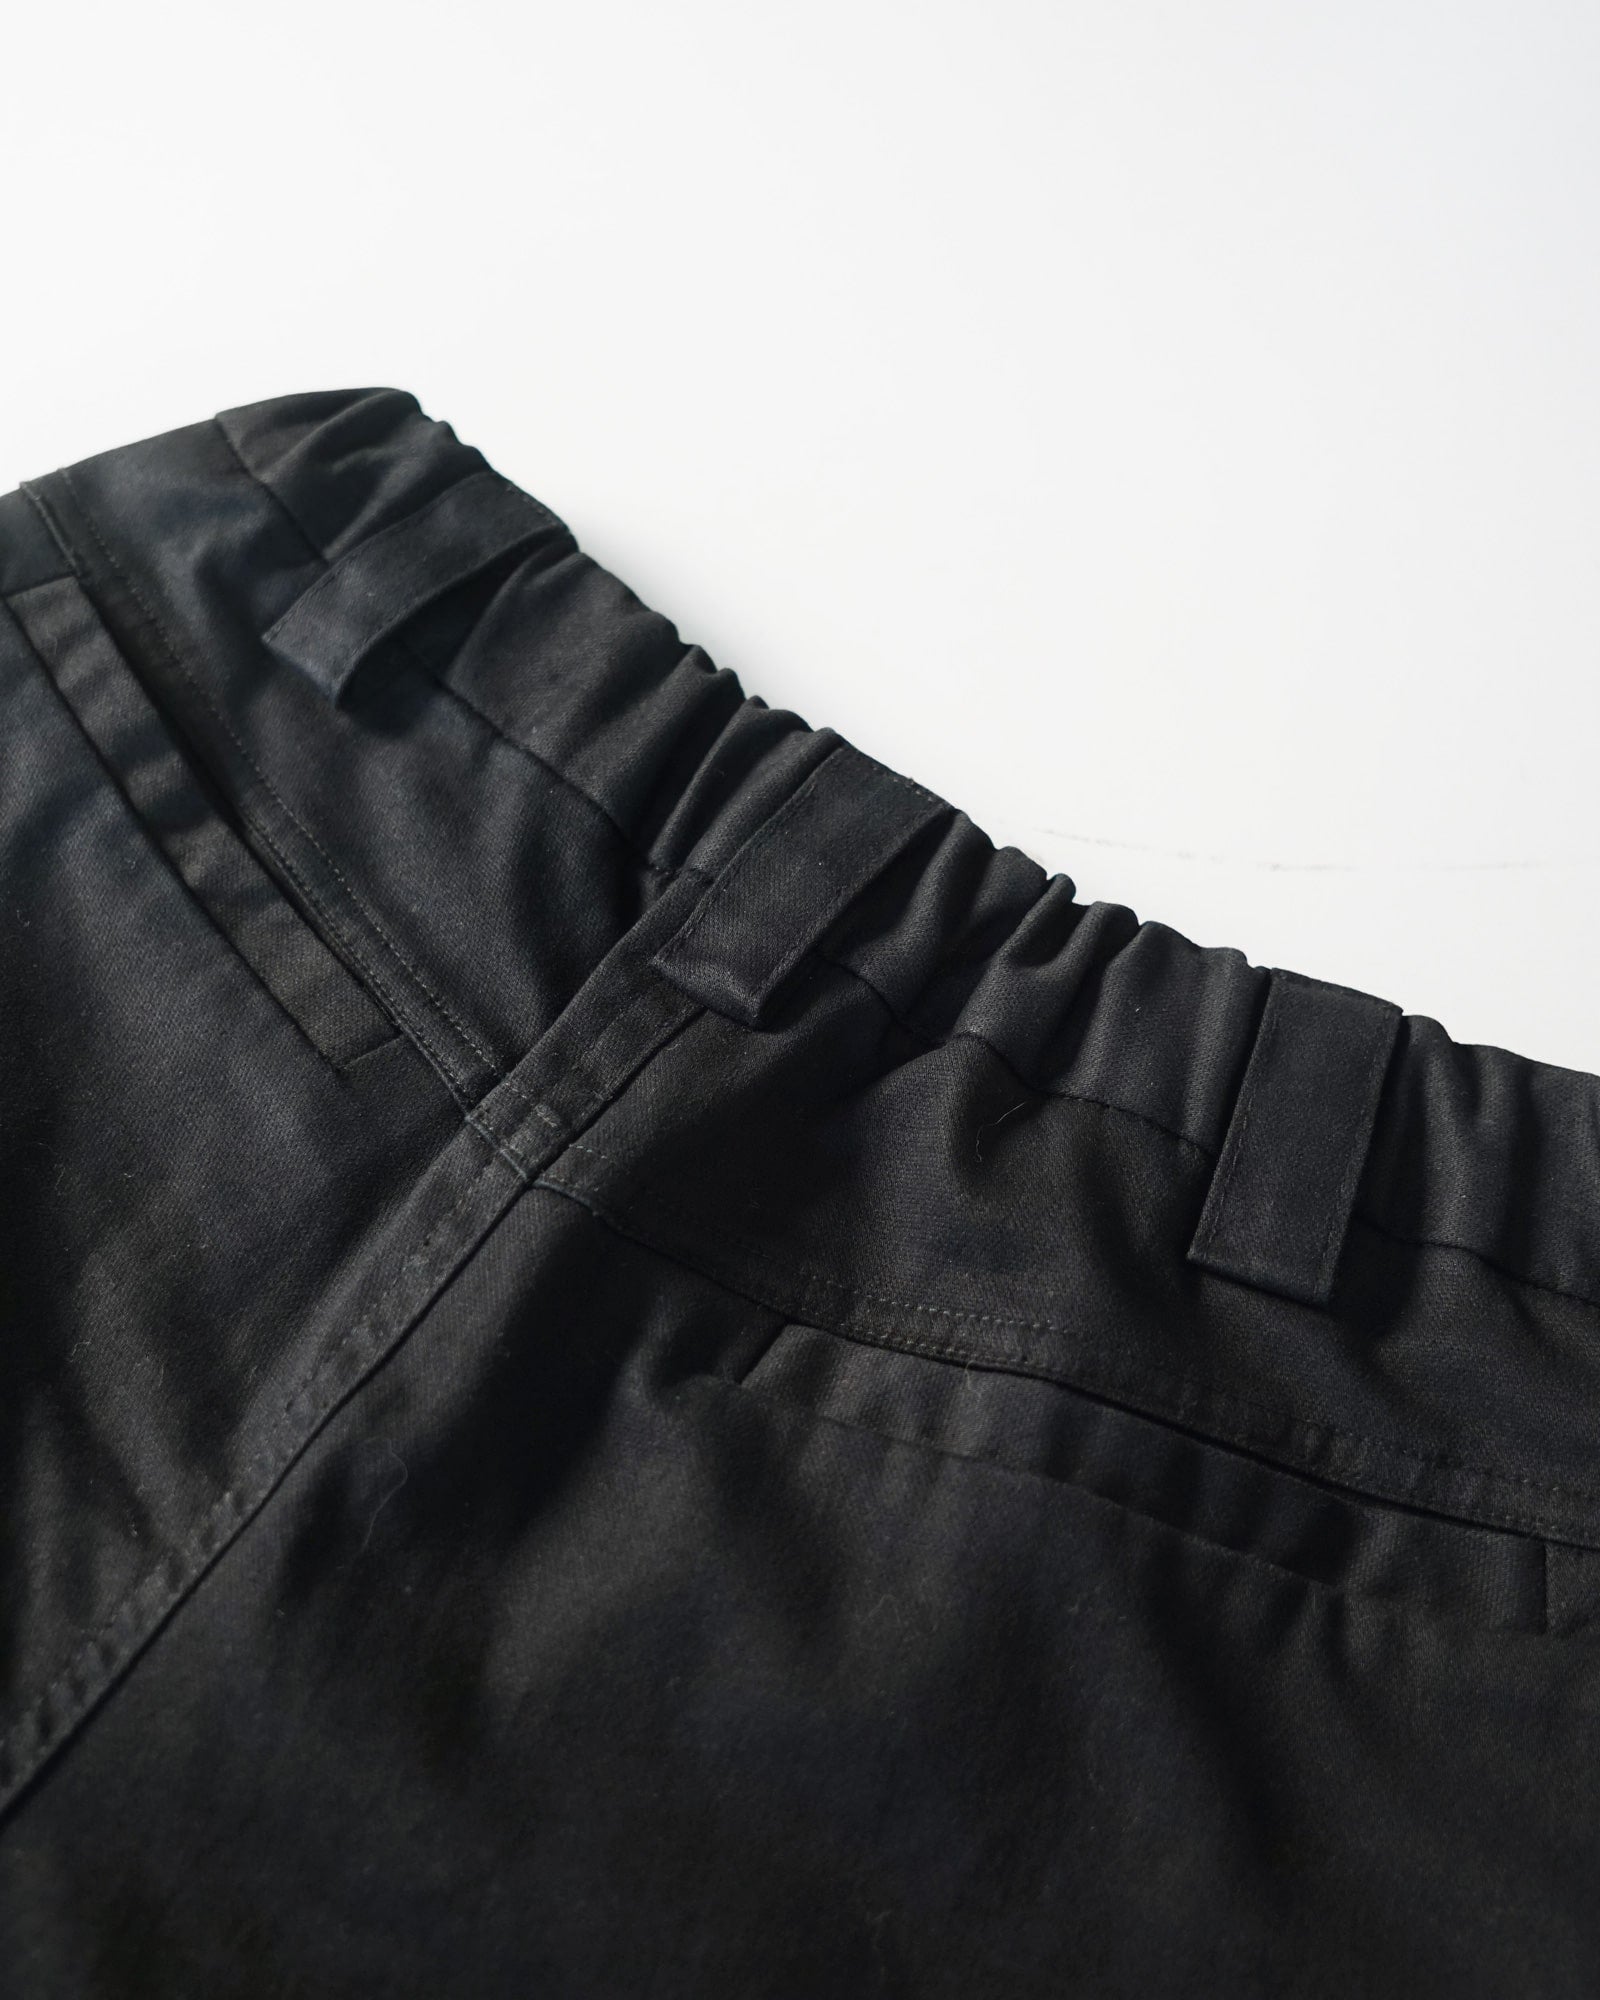 ROSEN-X Prototype Hiten Articulated Trousers in Cotton Sz 1